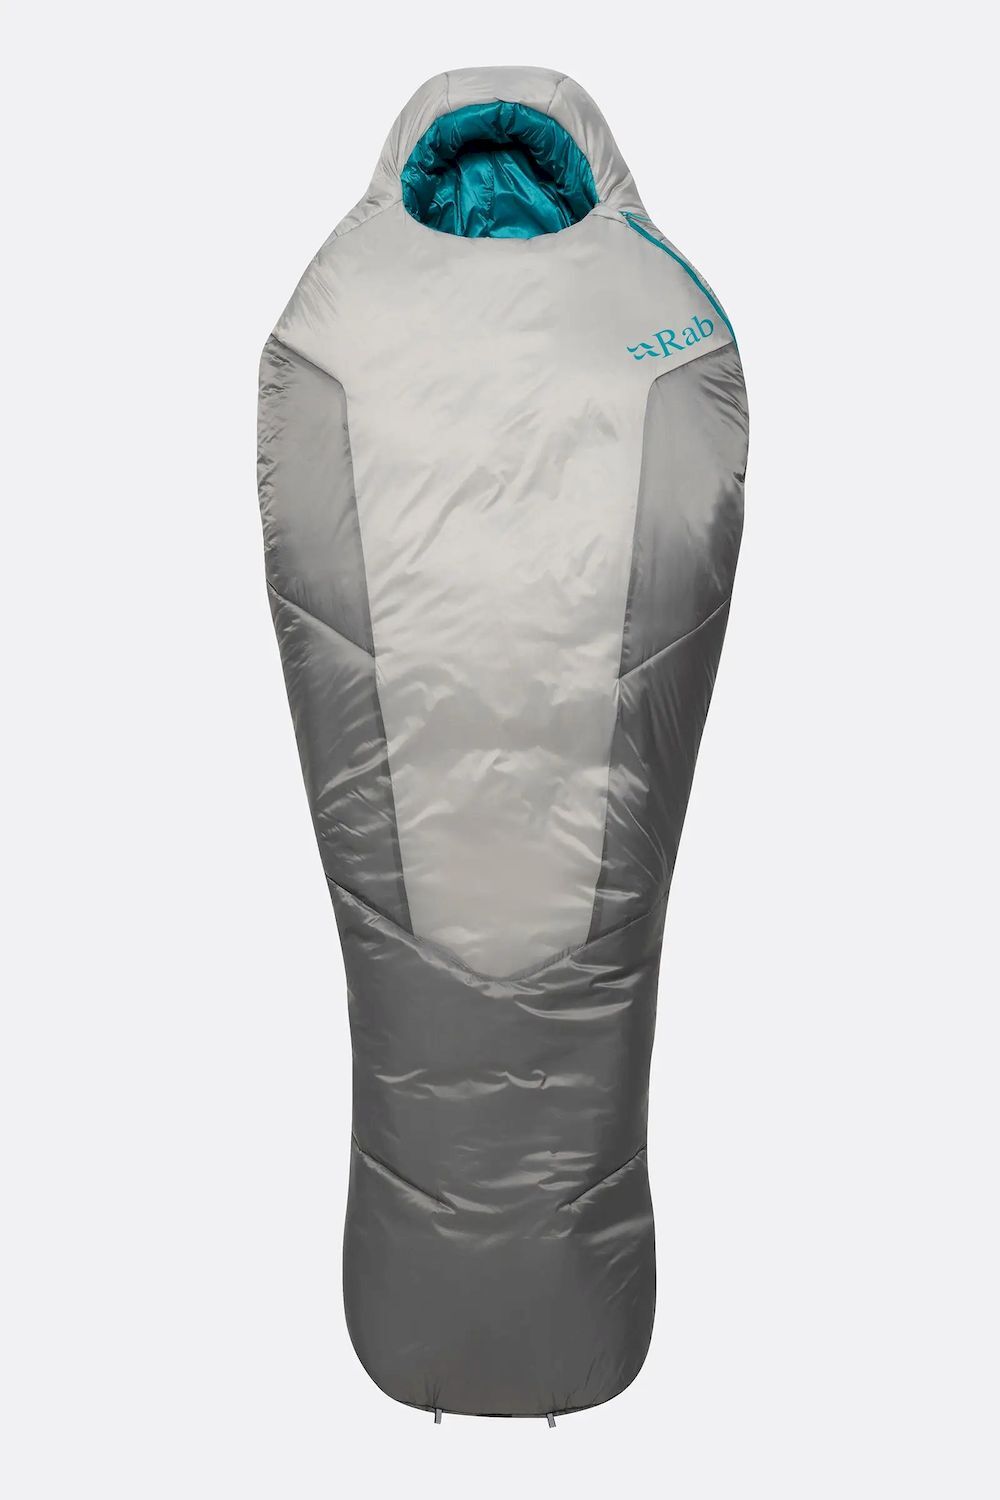 Rab Solar Ultra 3 Women's - Sleeping bag - Women's